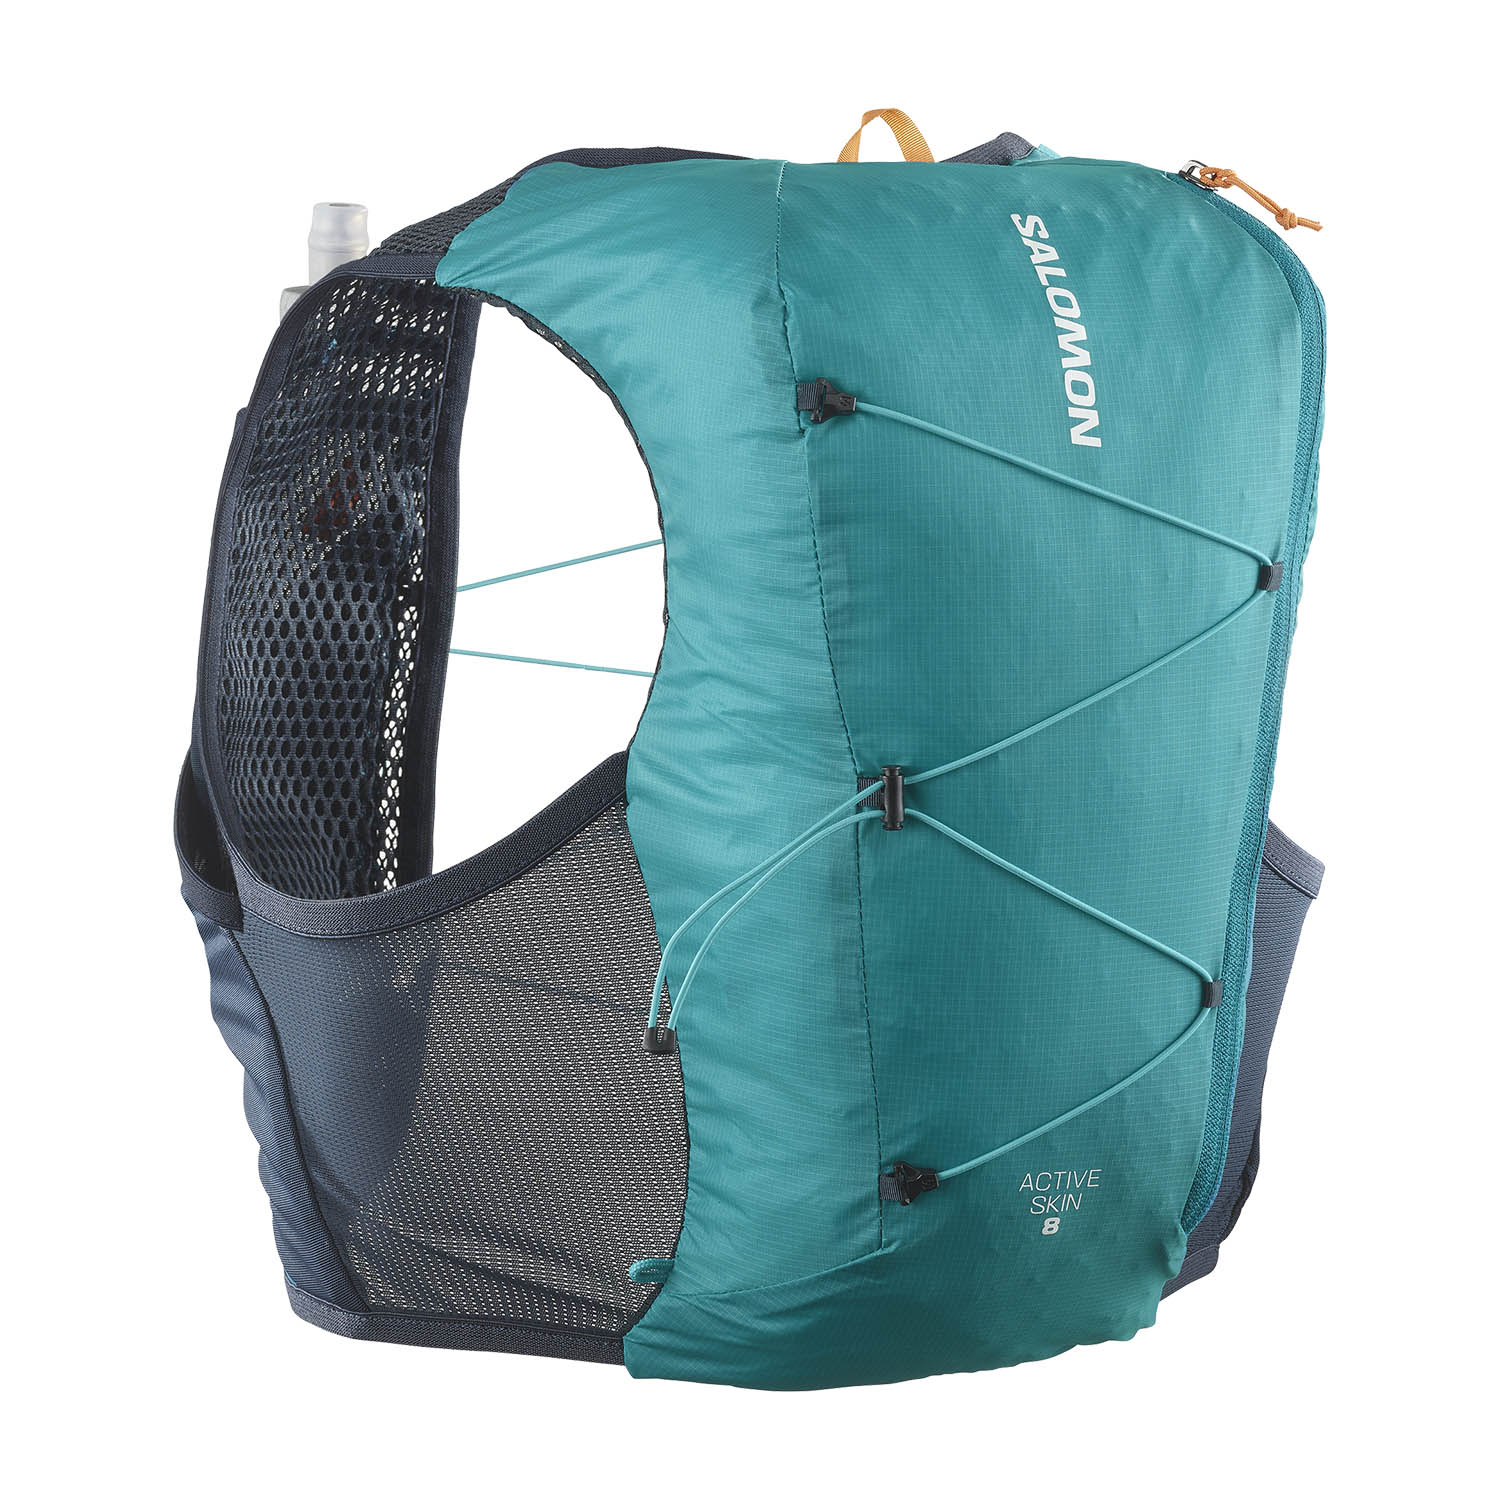 Salomon Active Skin 8 Set Backpack - Tahitian Tide/Carbon/Peacock Blue